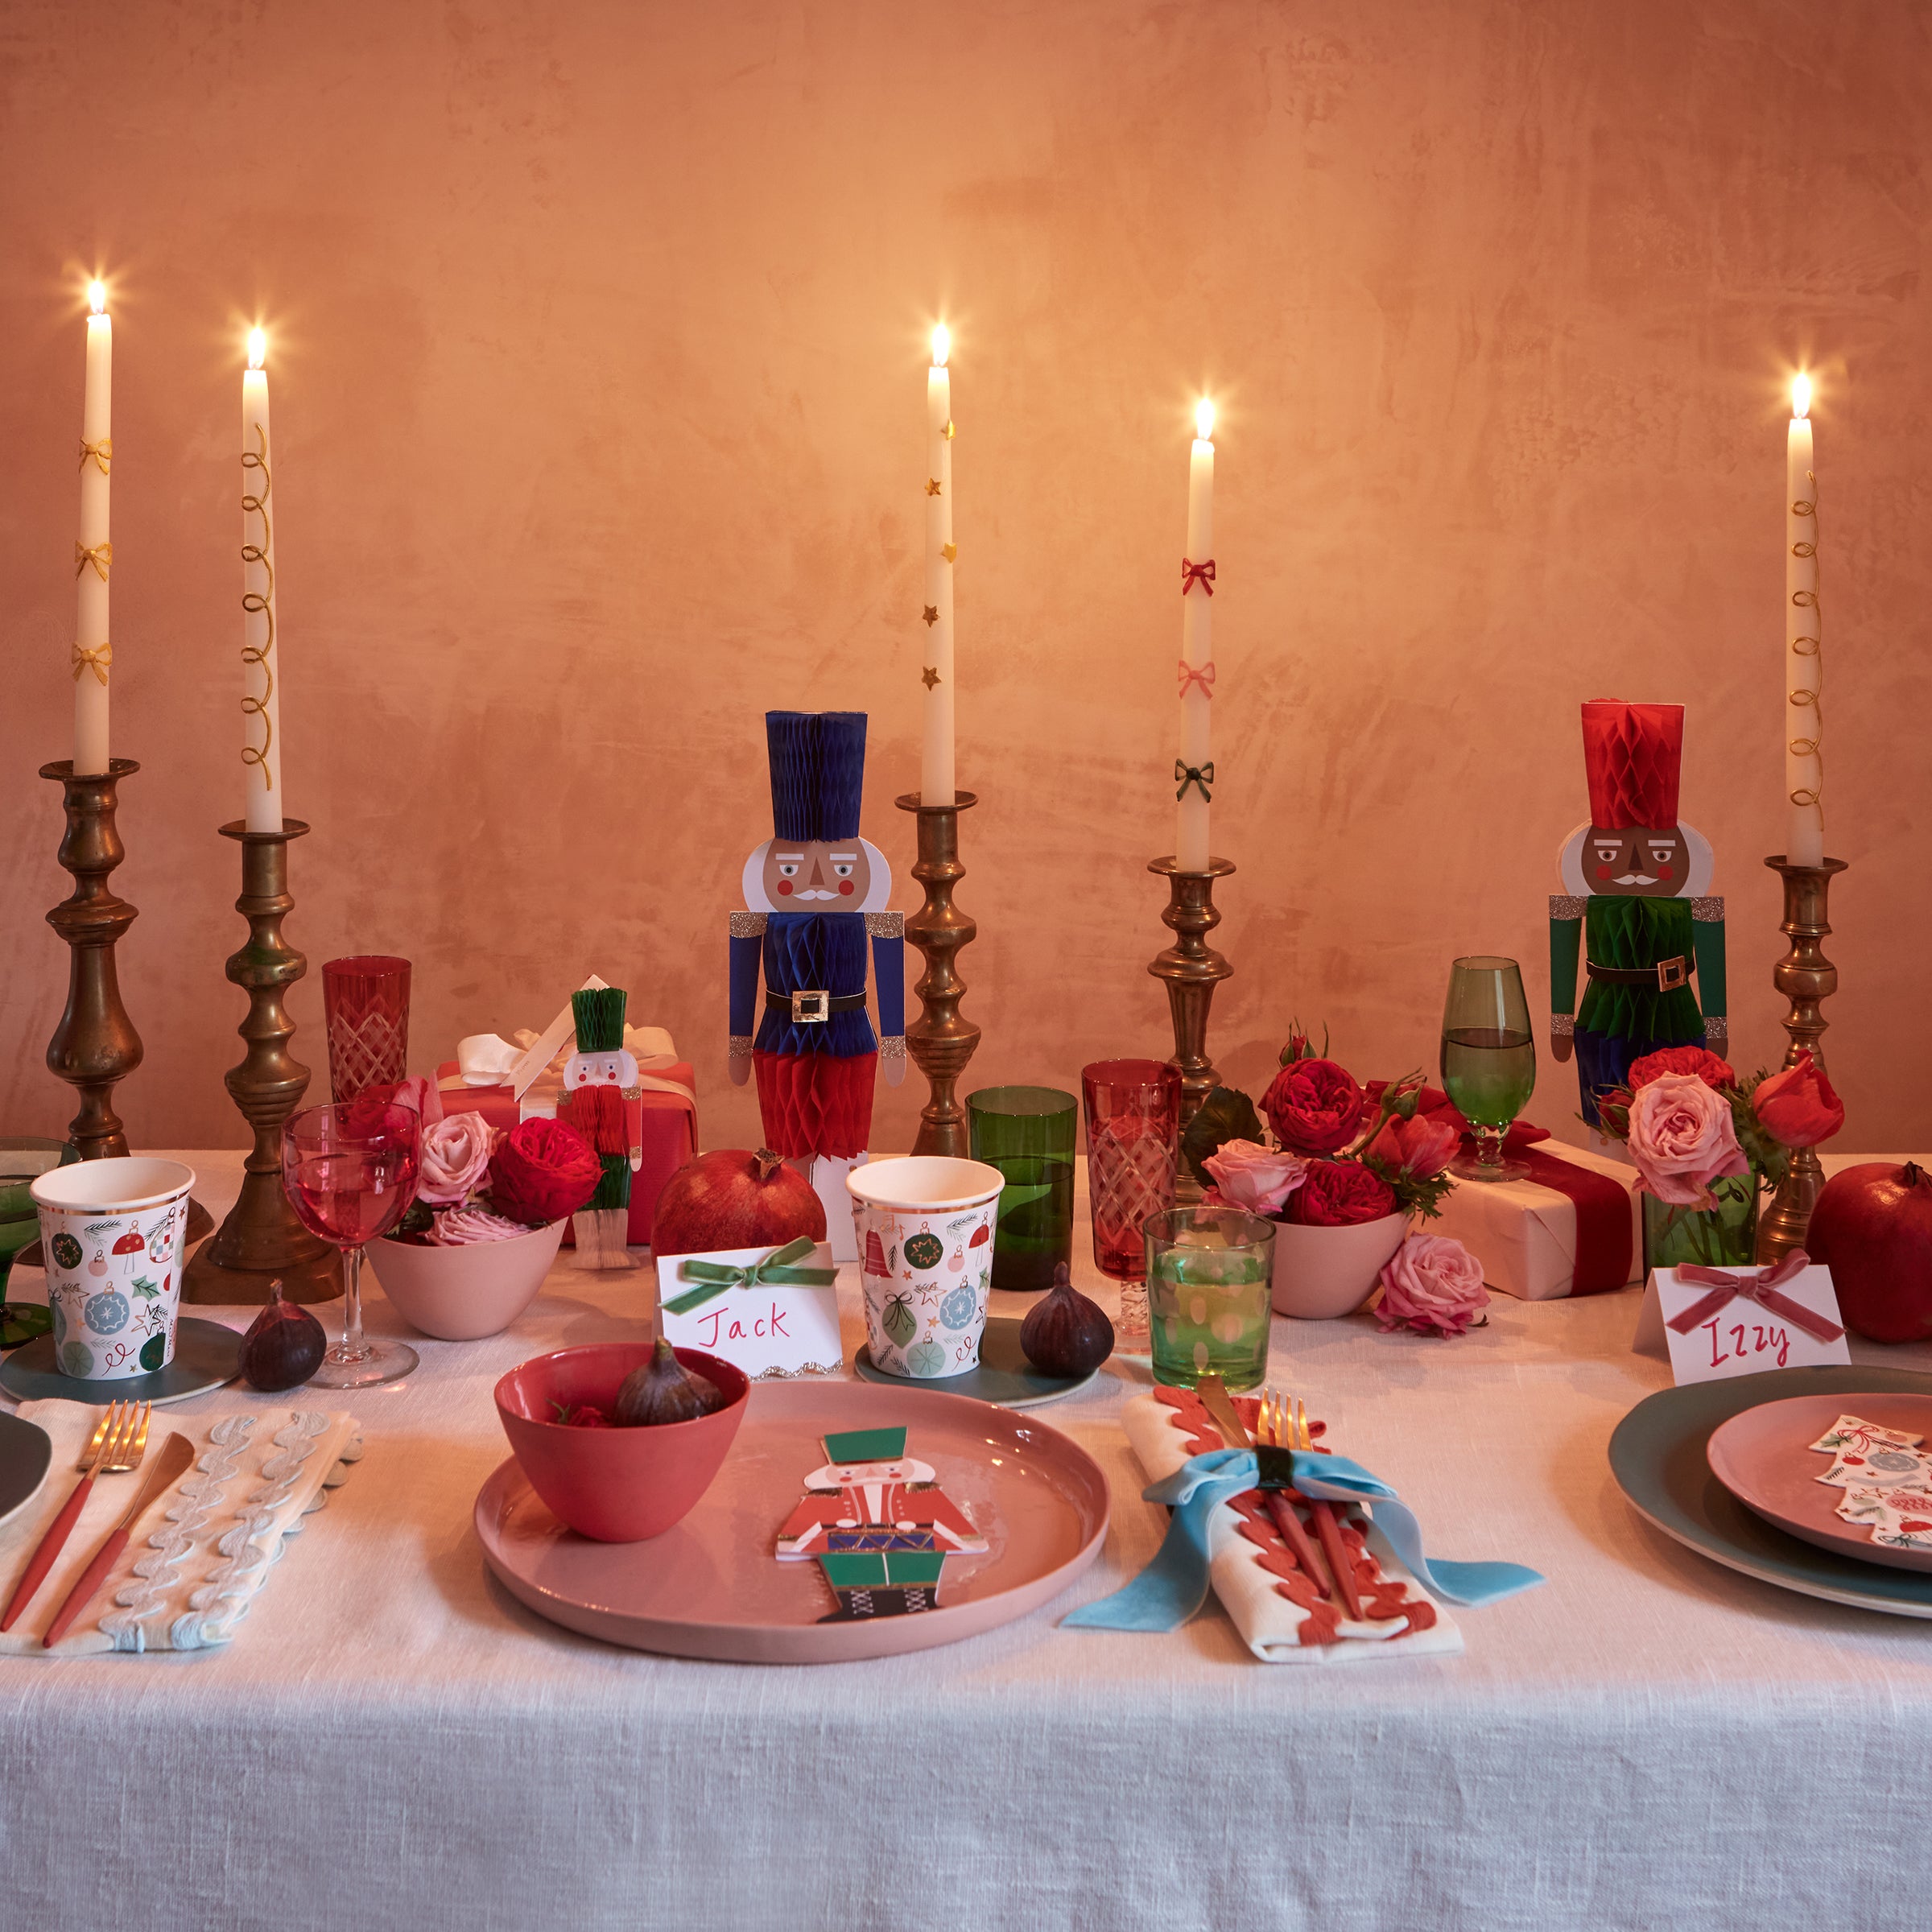  Marye-Kelley Nutcracker Christmas Home décor • Tissue Box Cover  • Paper Mache • Nutcracker Gifts : Home & Kitchen